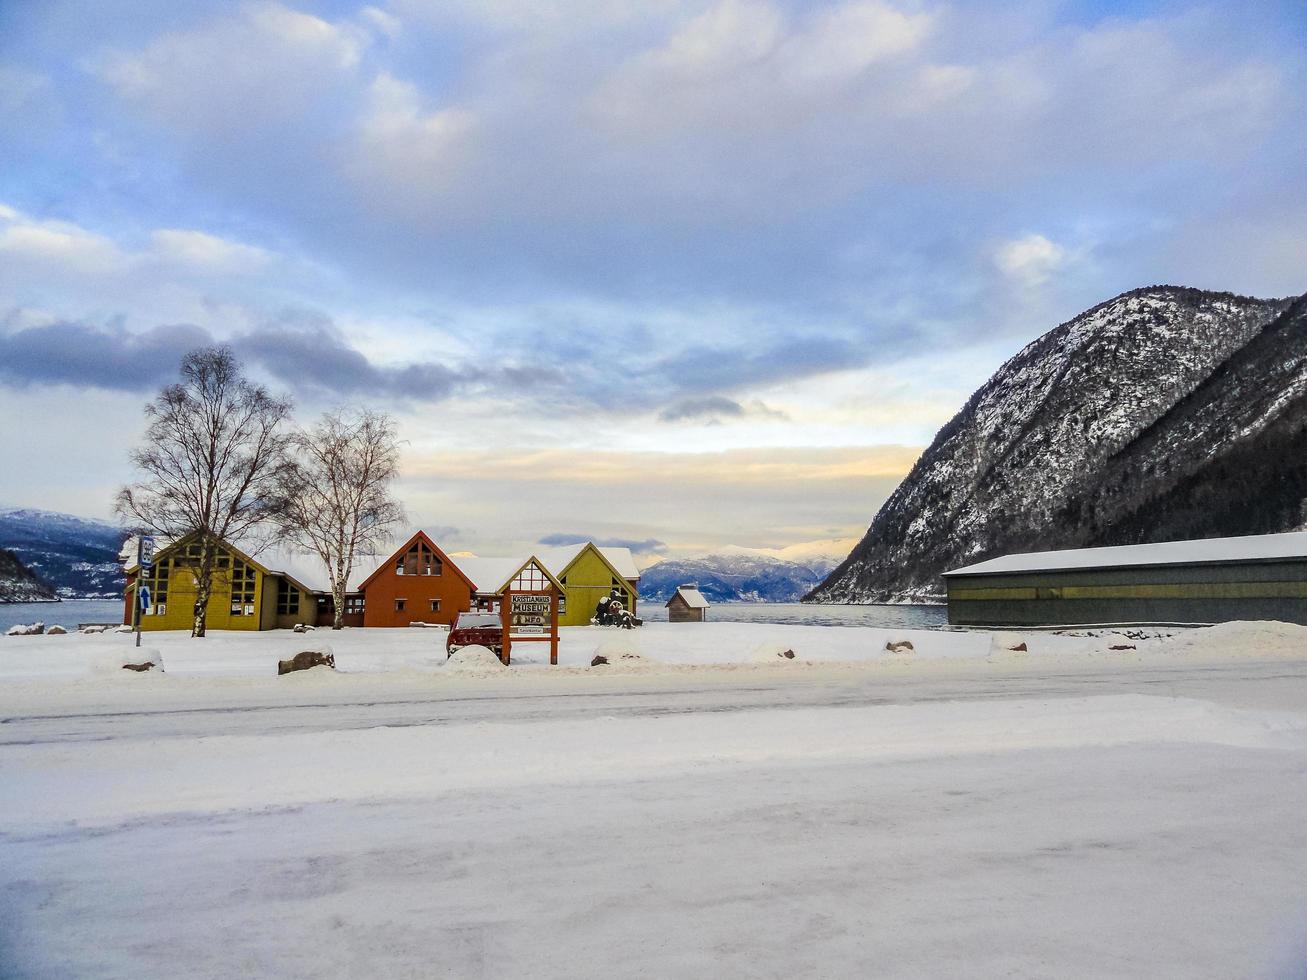 Vik Skisenter, Roysane, Norway. Wonderful view of Sognefjord in winter. photo